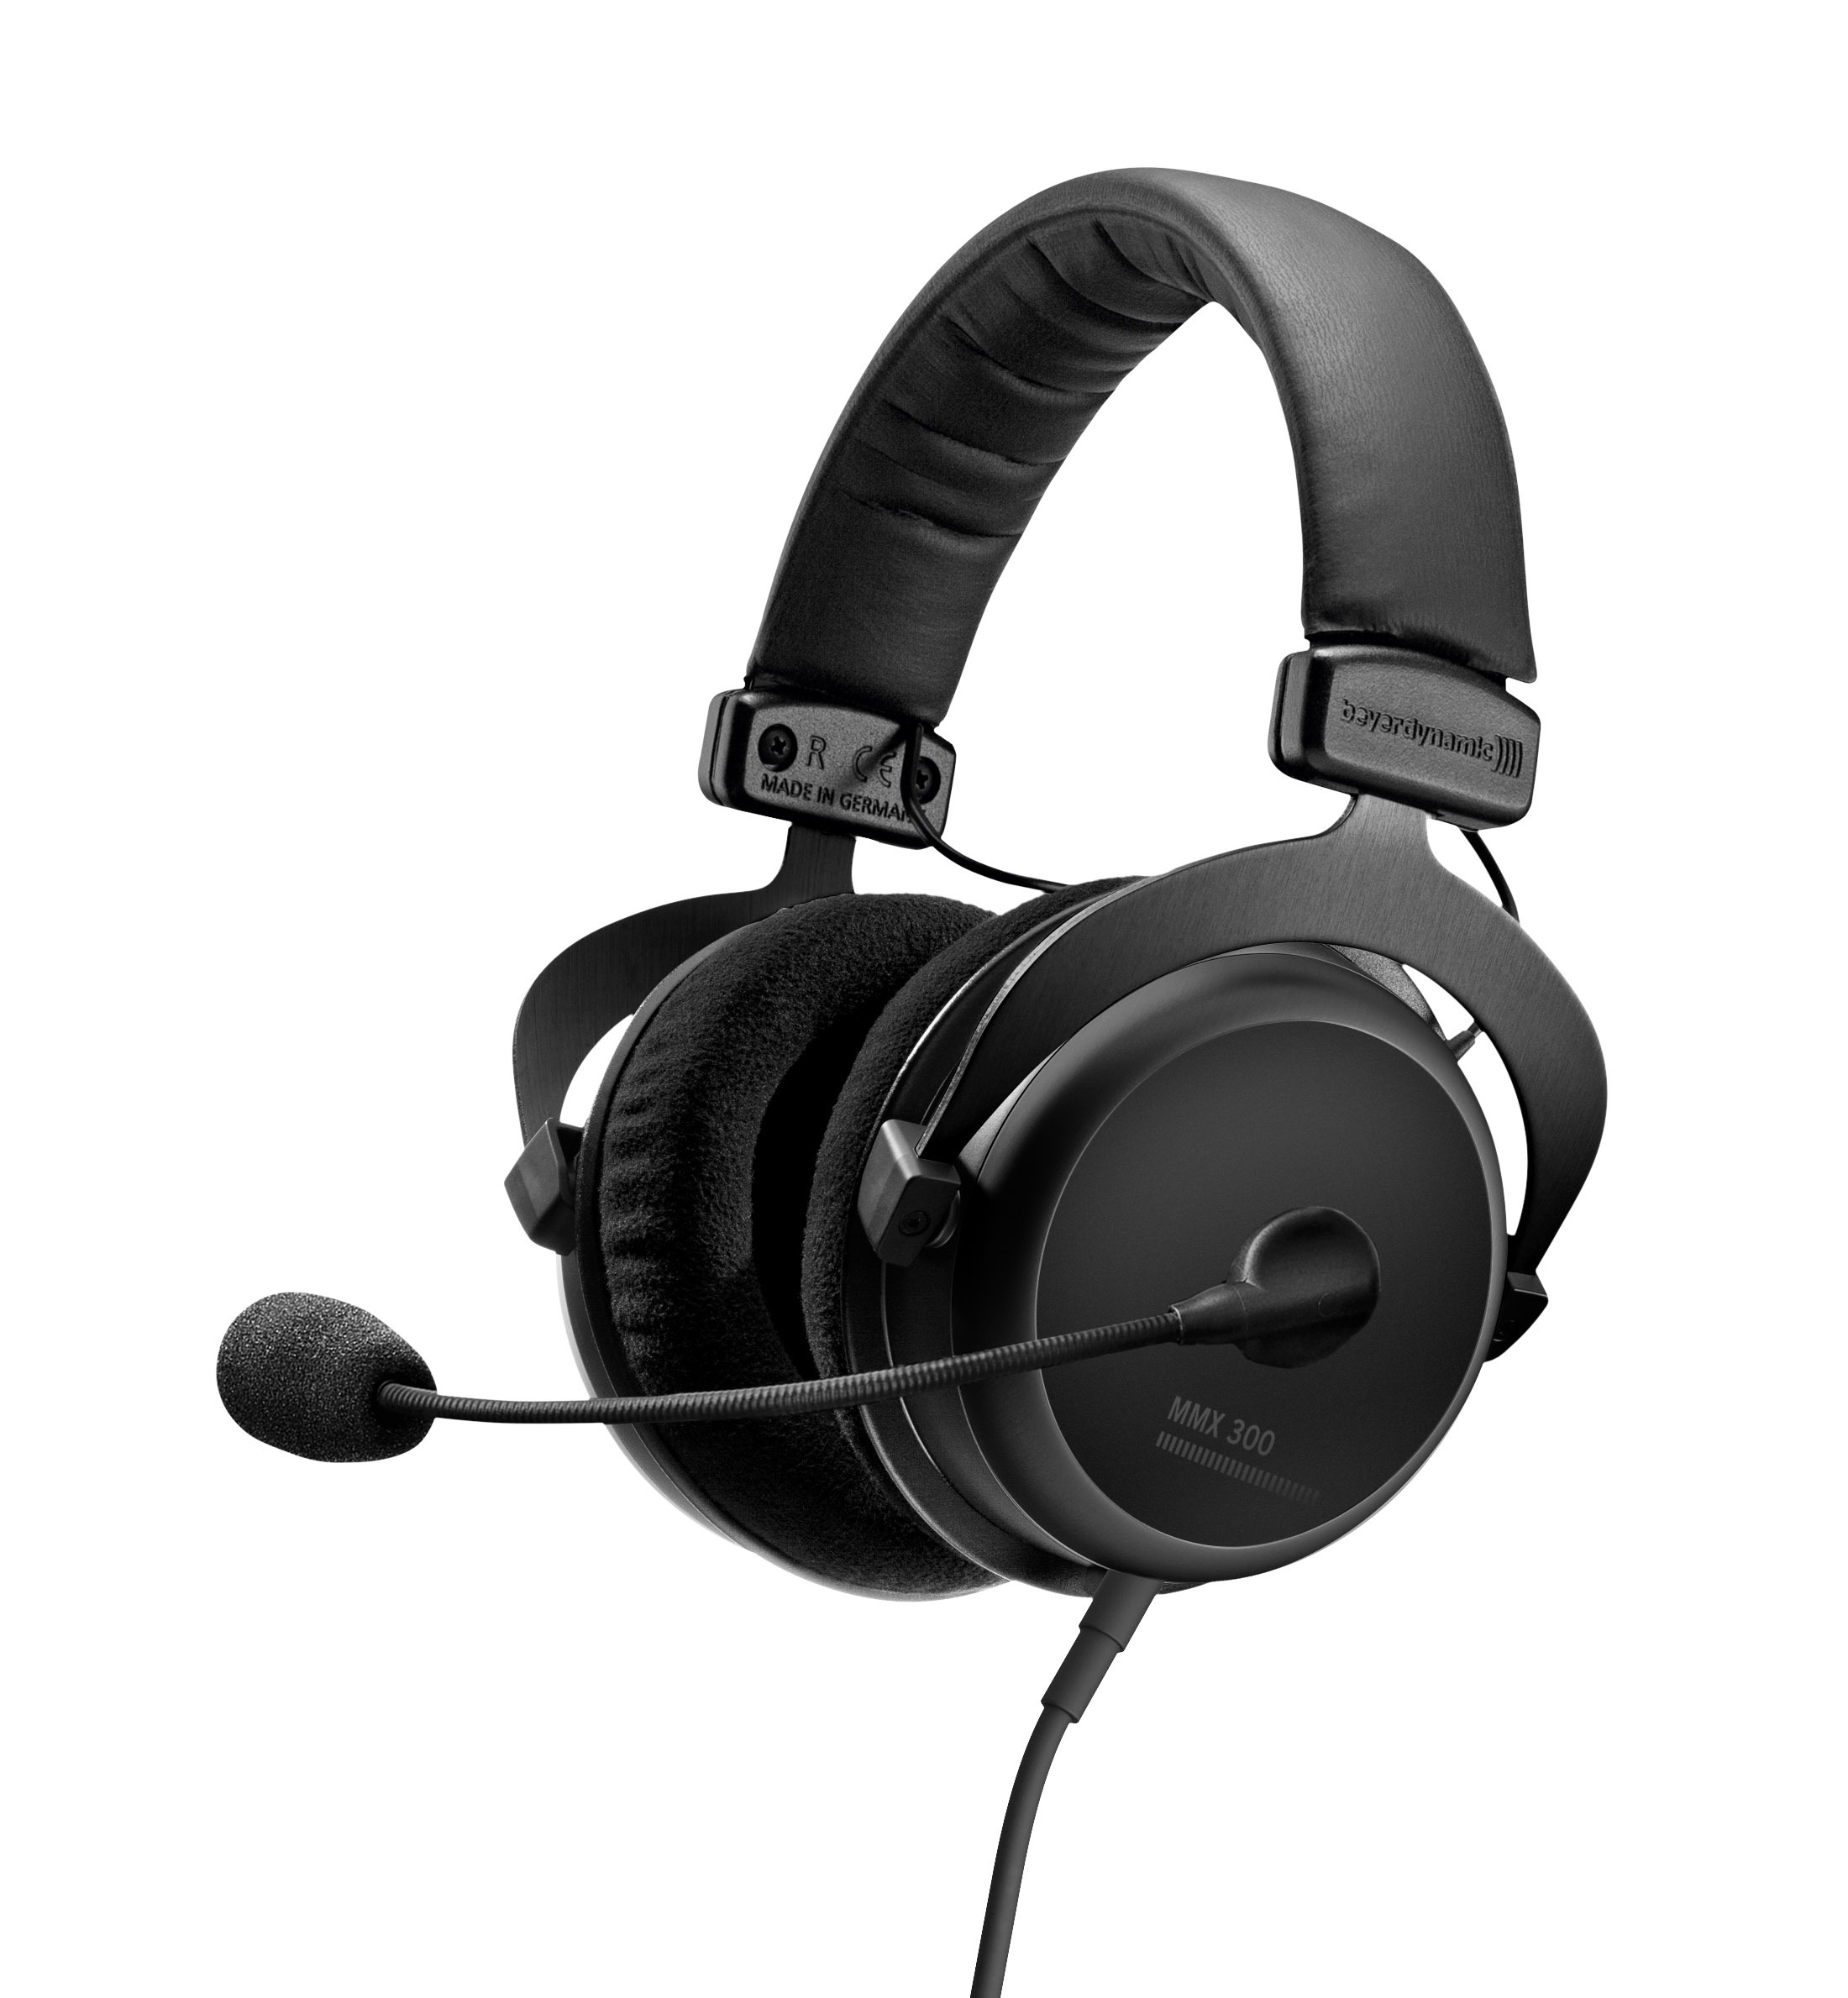 Beyerdynamic MMX300 Mac/PC Gaming Premium Digital Headset with Microphone 1169829 Accessories Digital DJ Gear